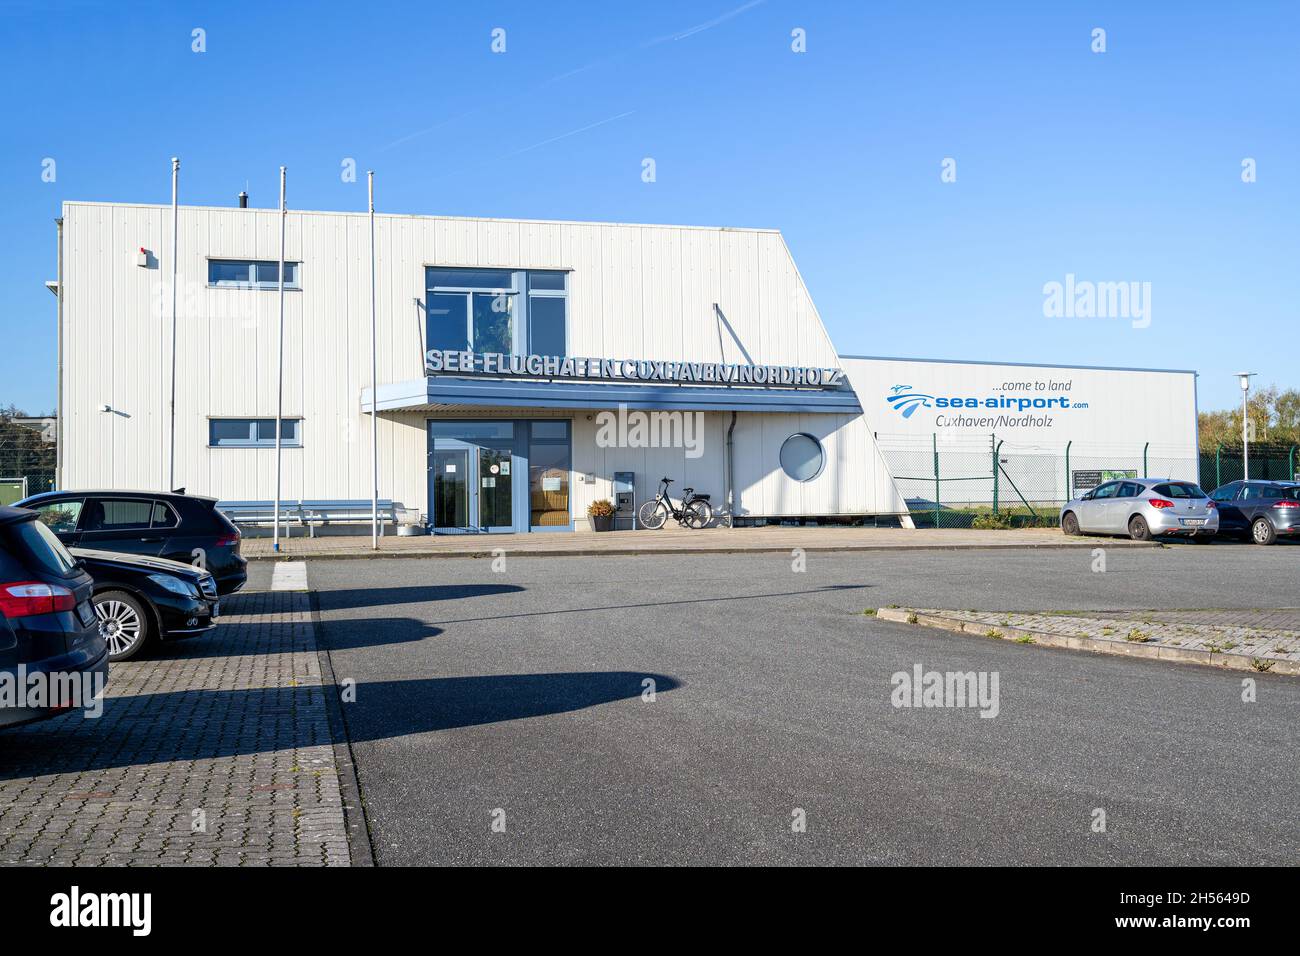 Terminalgebäude des See-Flughafen Cuxhaven/Nordholz Stockfoto